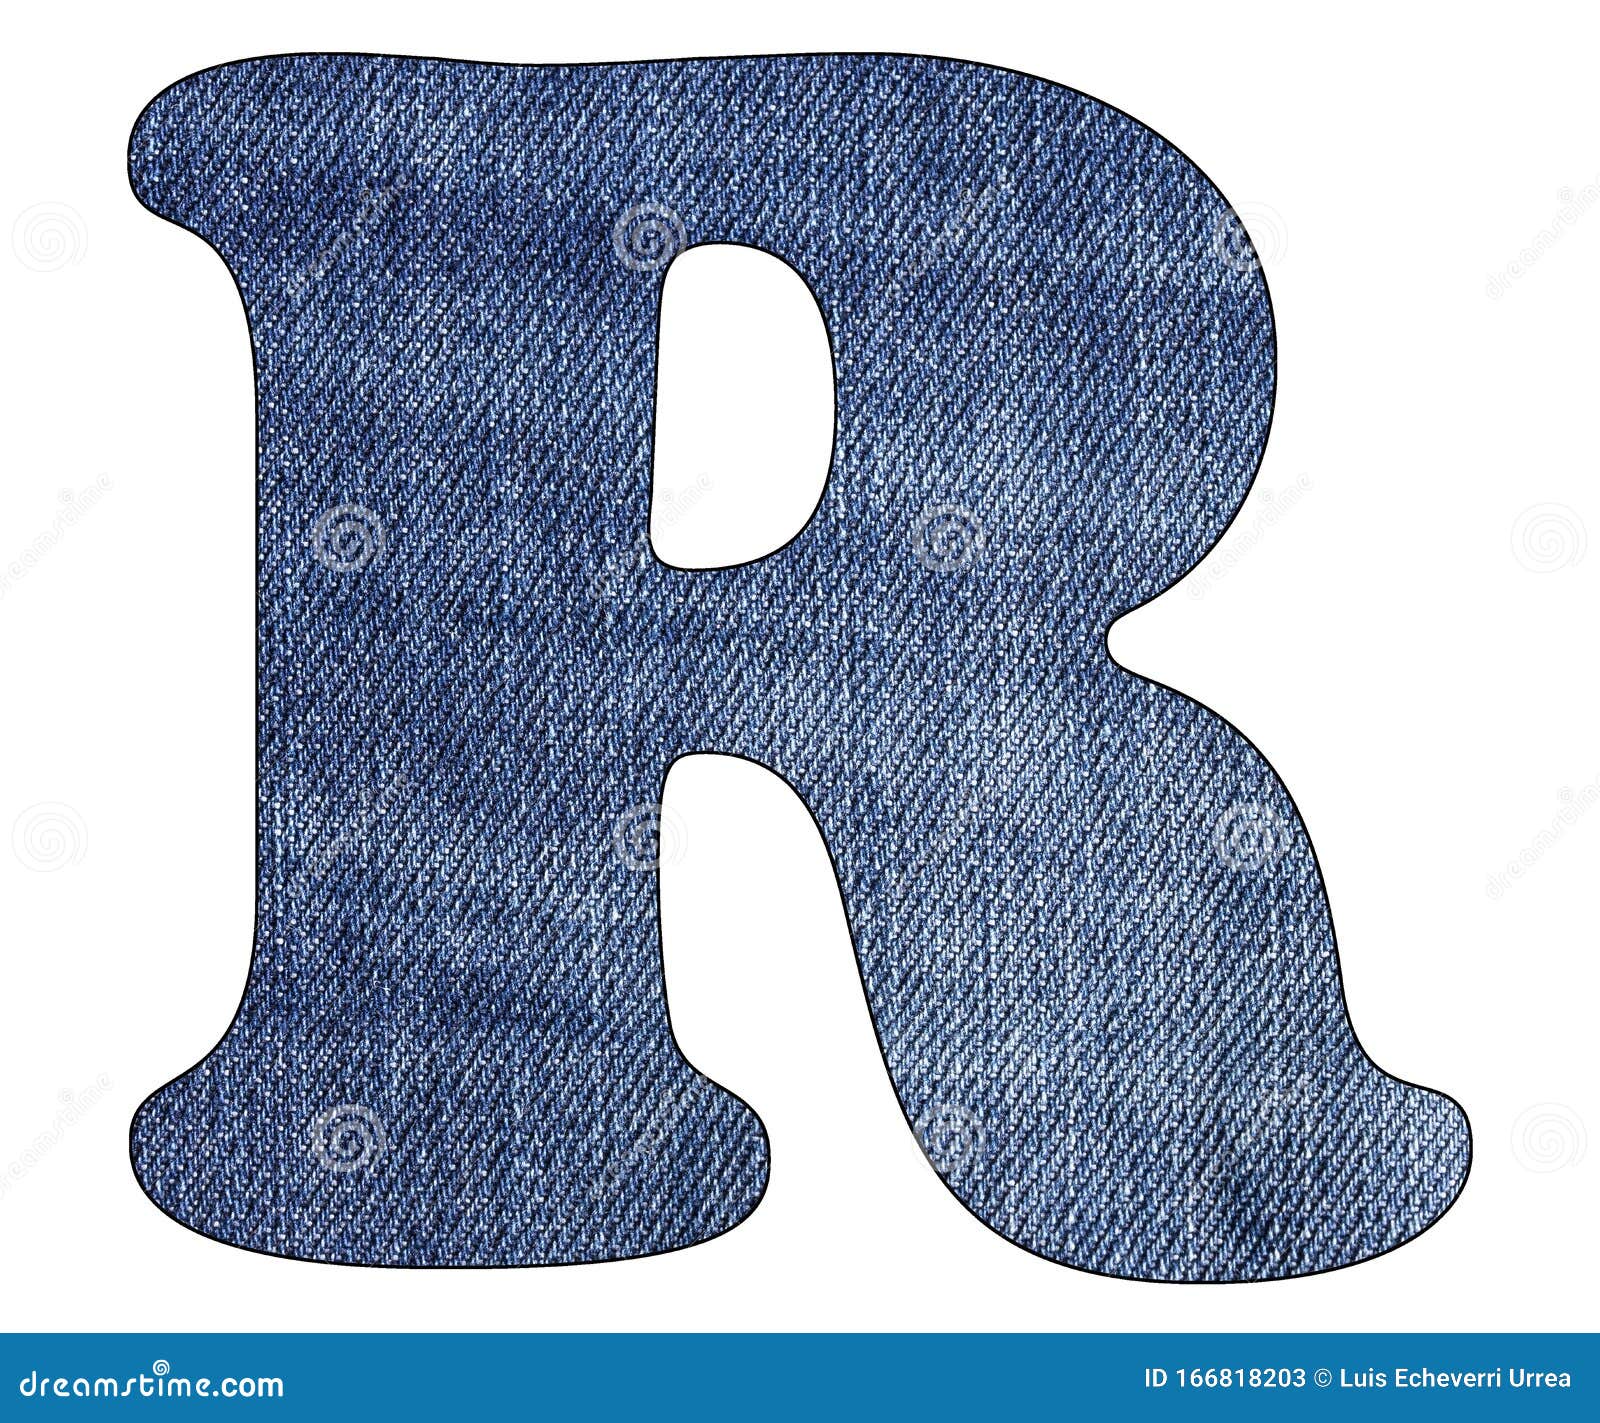 Letter R of the Alphabet - Texture Details of Denim Blue Jeans. White ...